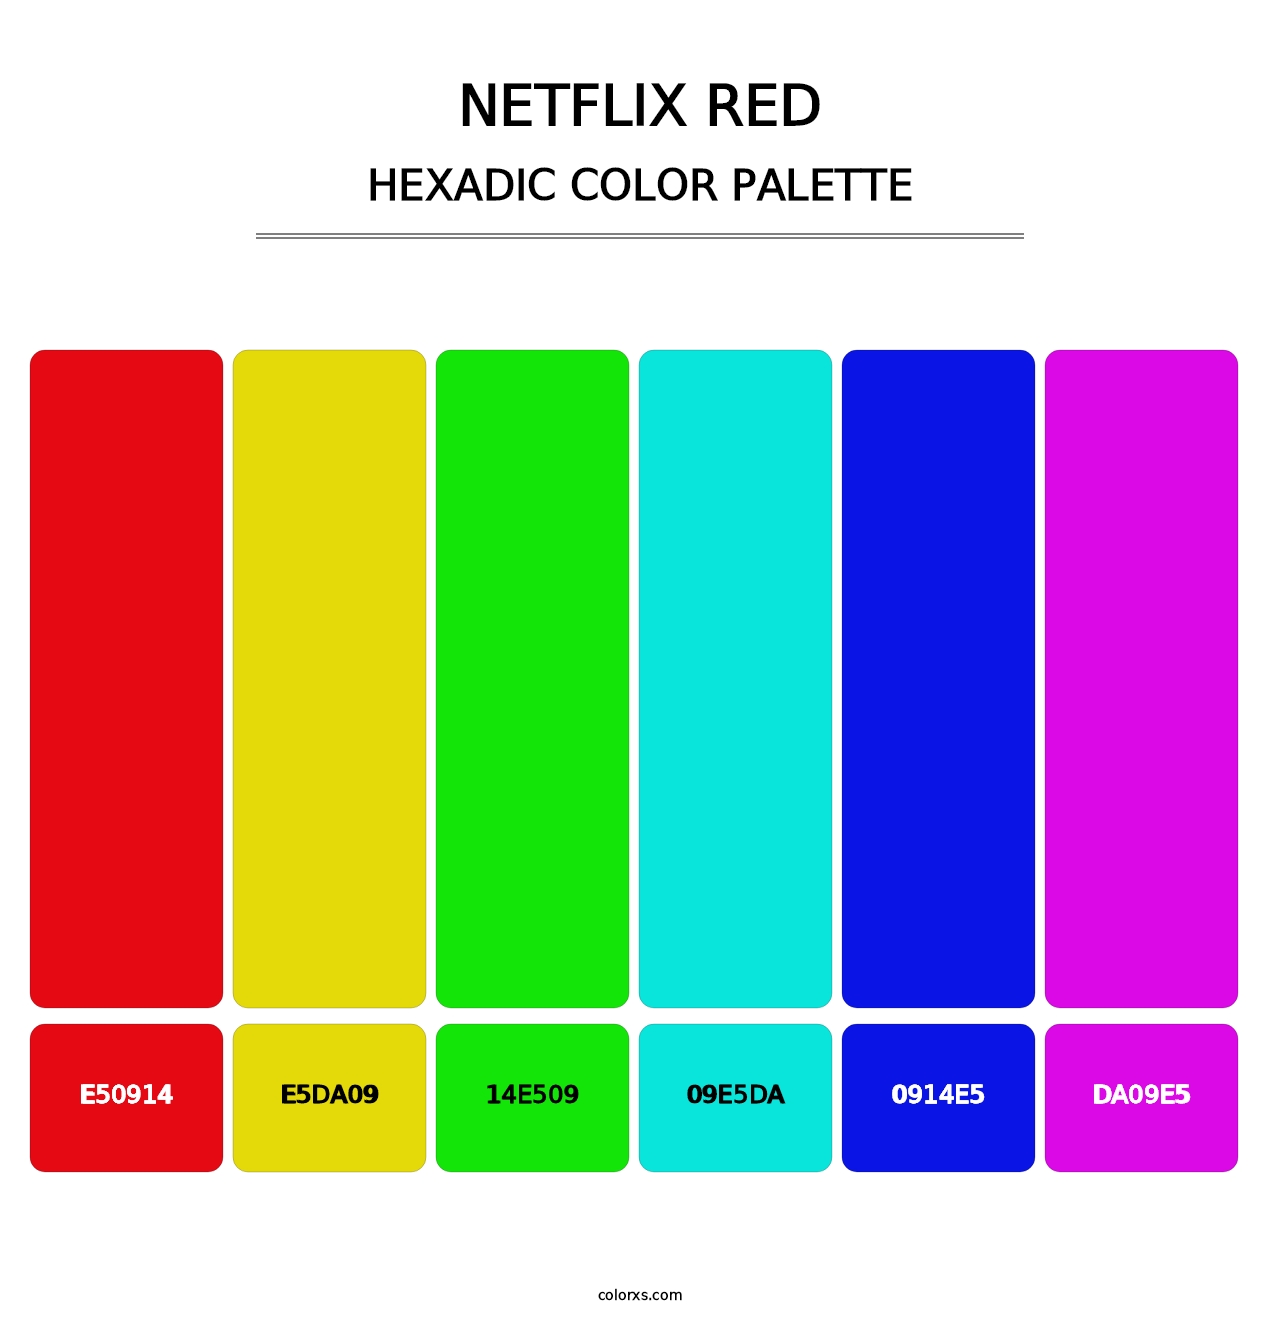 Netflix Red - Hexadic Color Palette